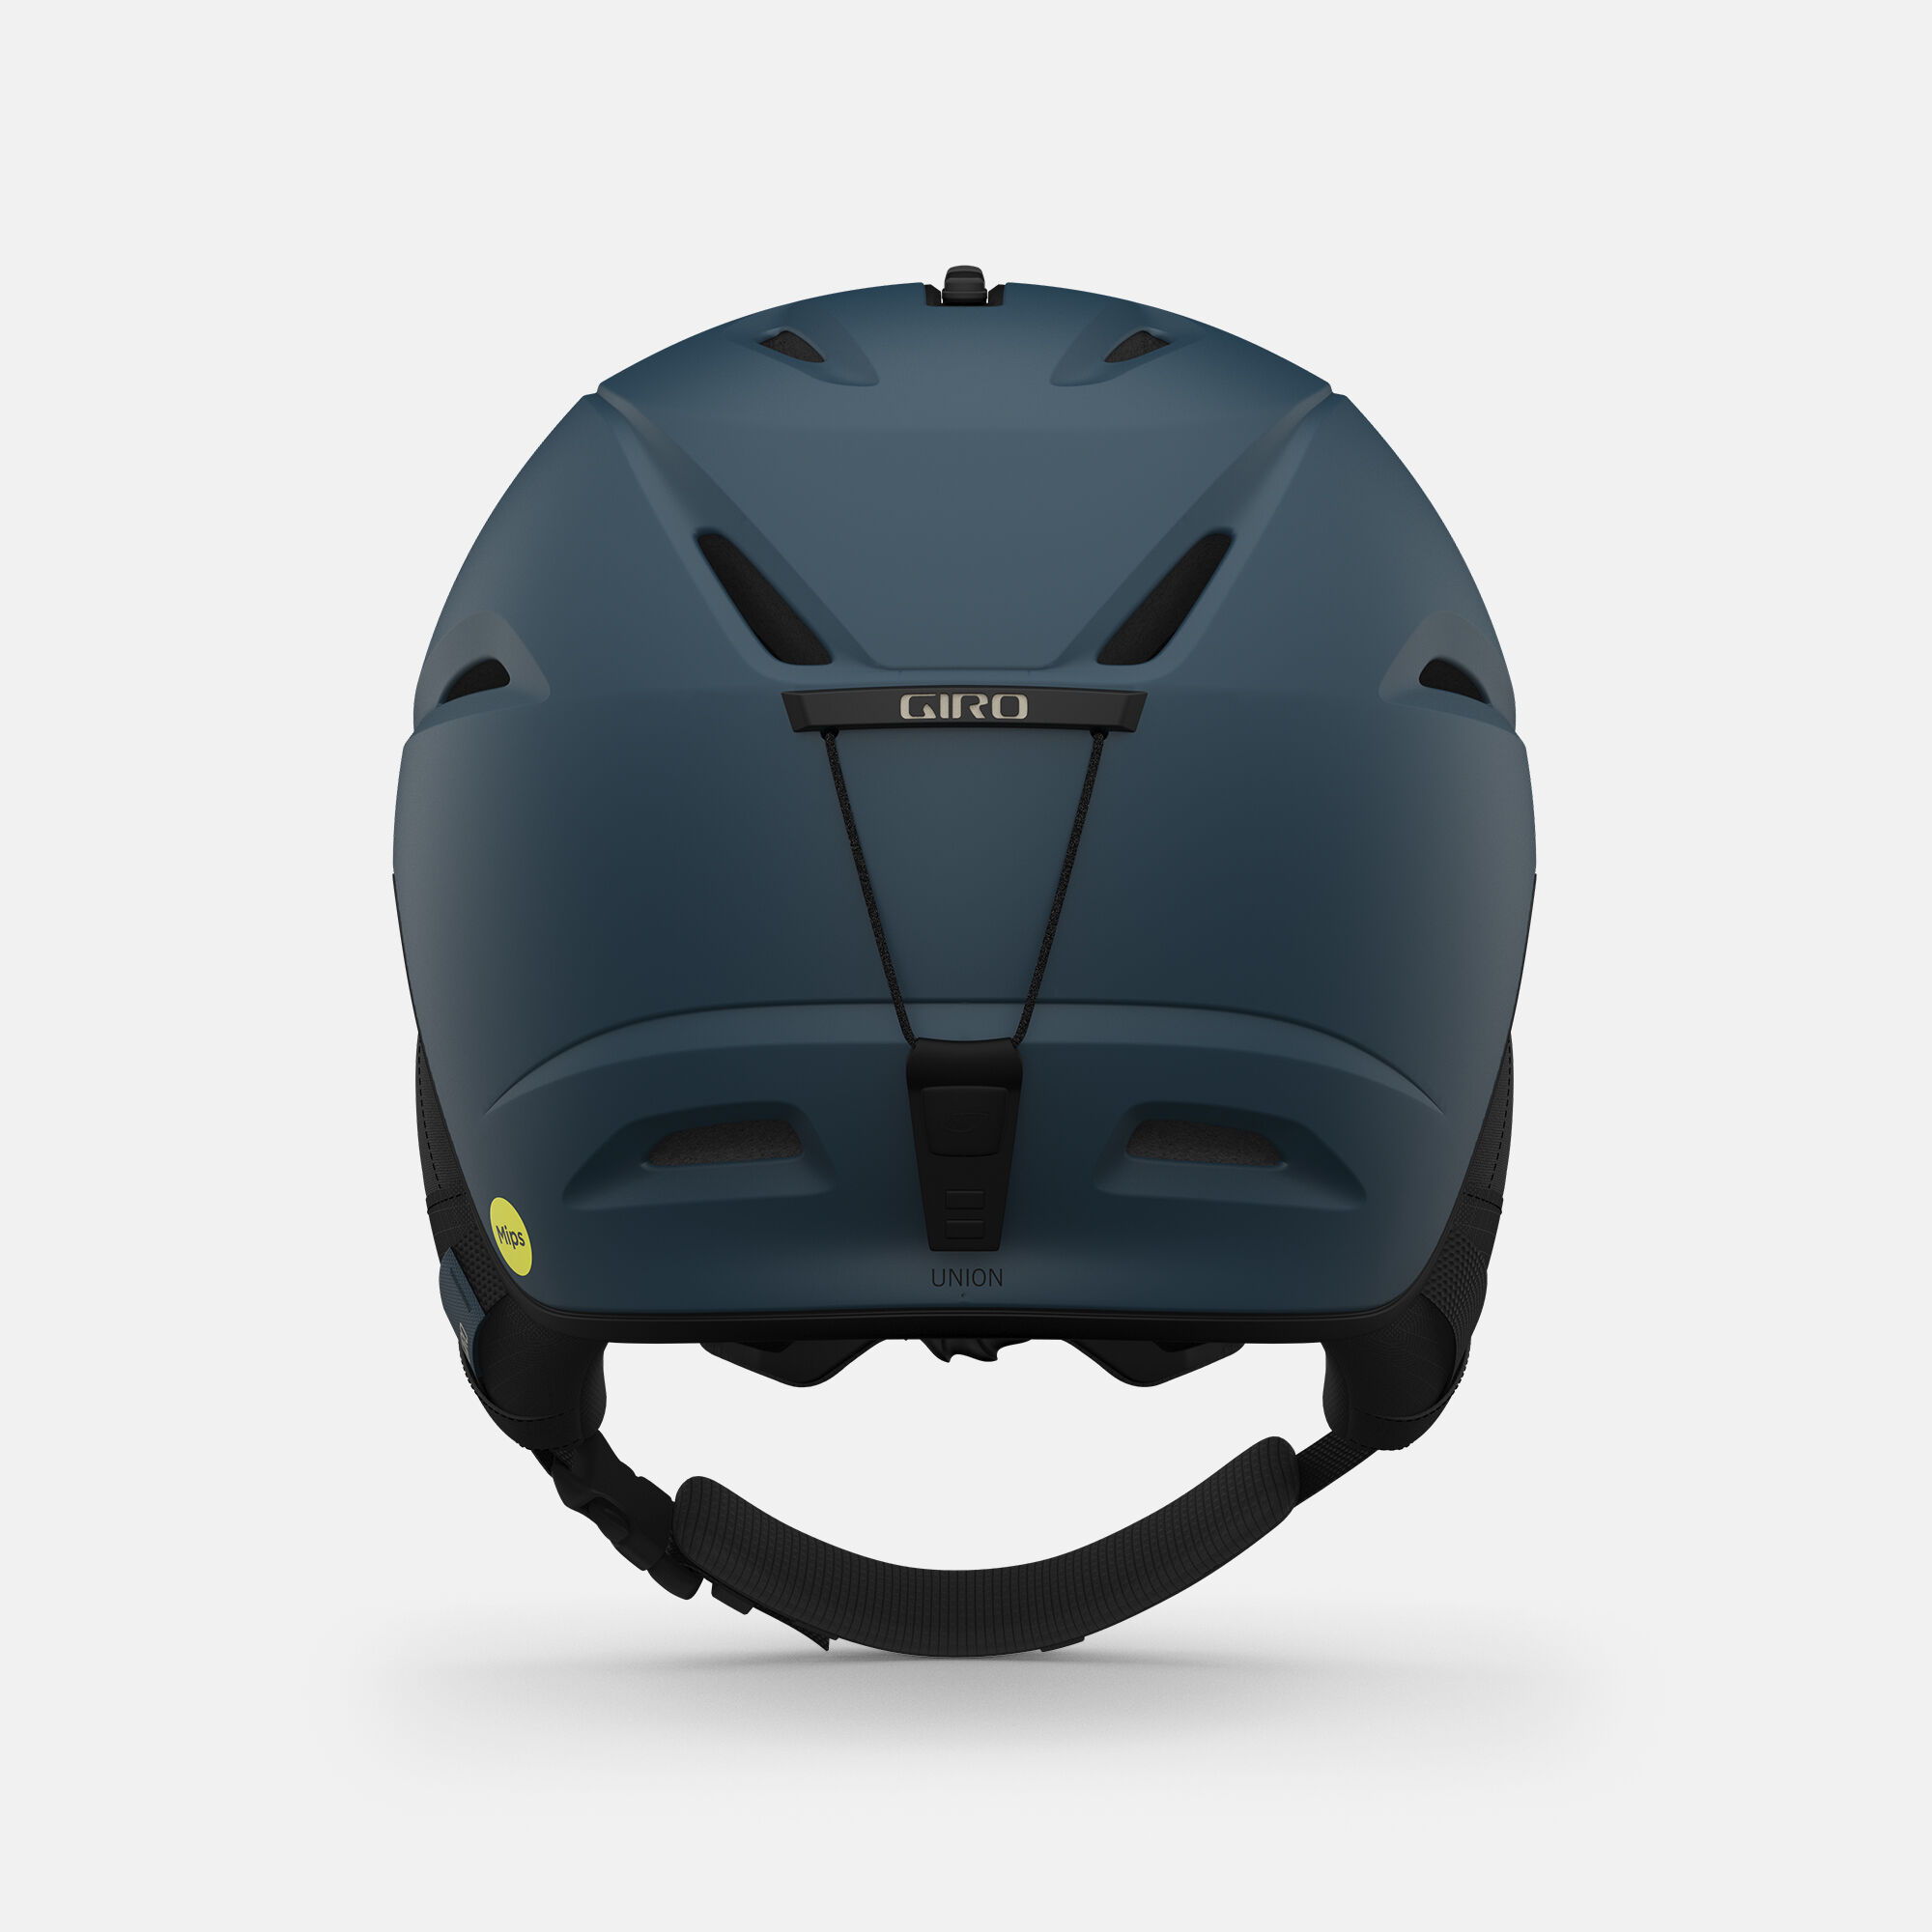 Giro Union Mips Snow Sports Helmet MEDIUM 55.5-59 cm Matte Warm Black/Olive 2020 